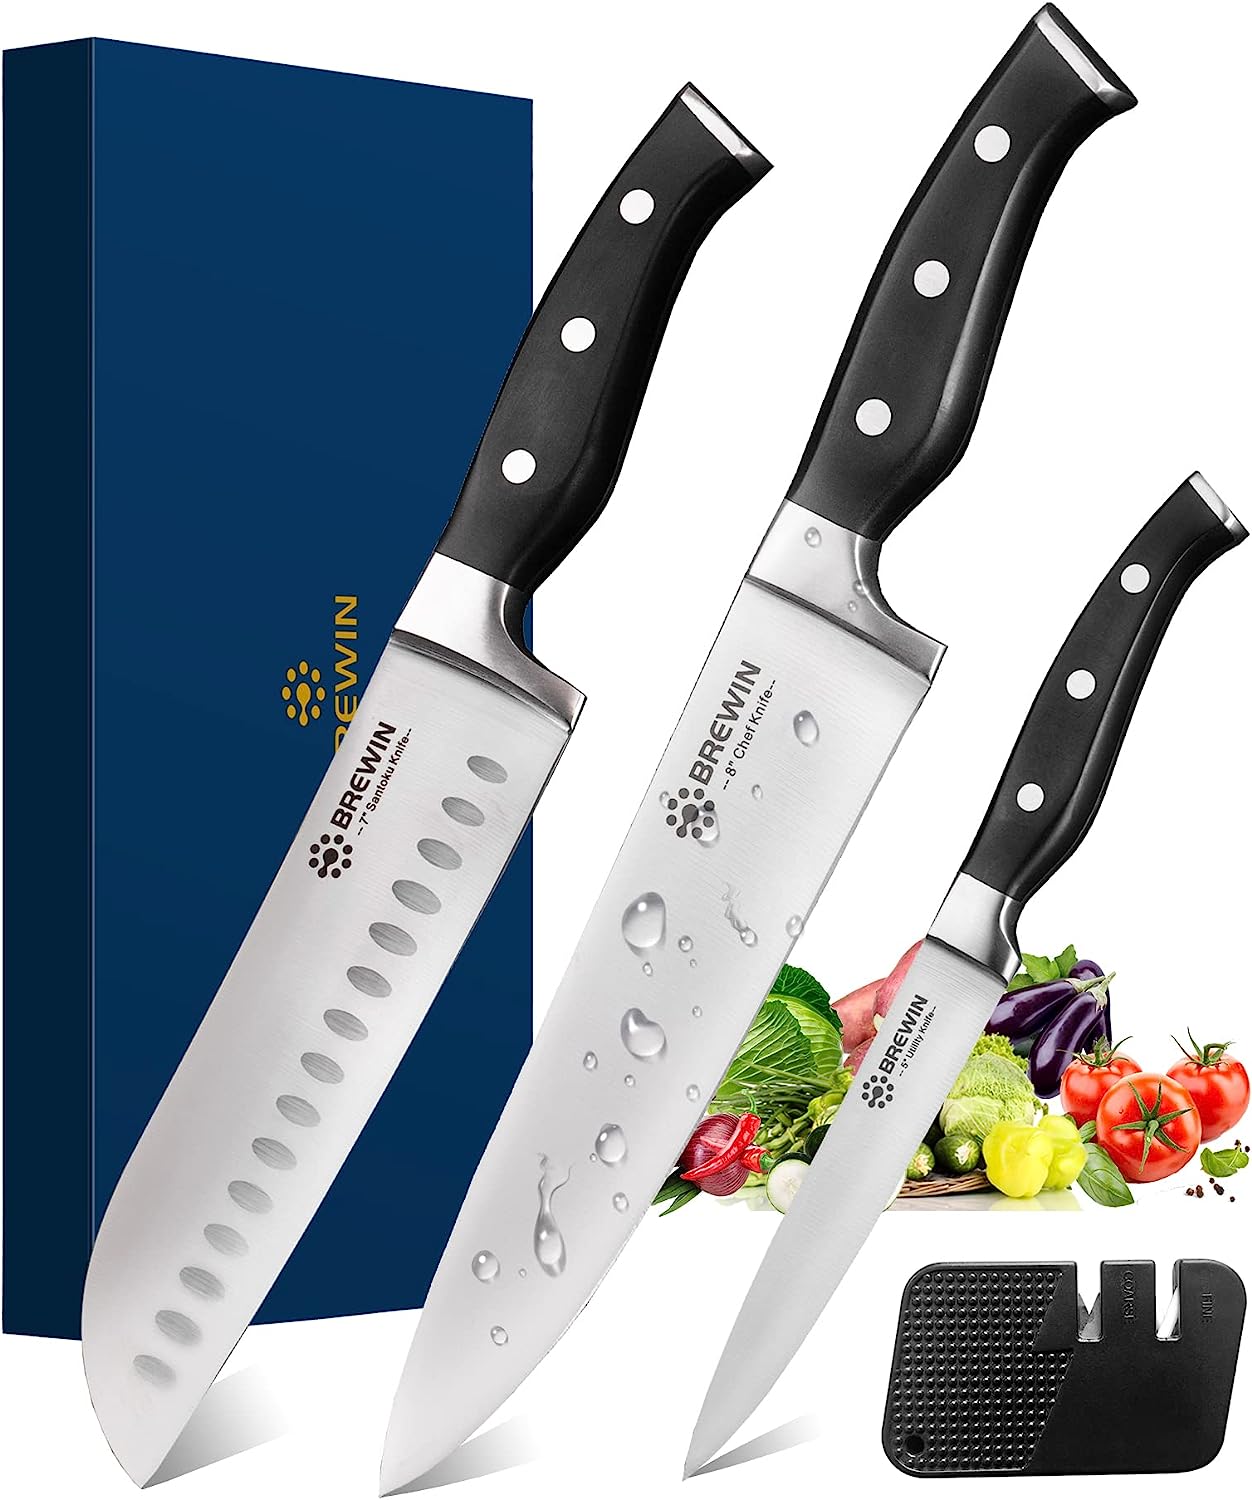 professional kitchen knives 3pc